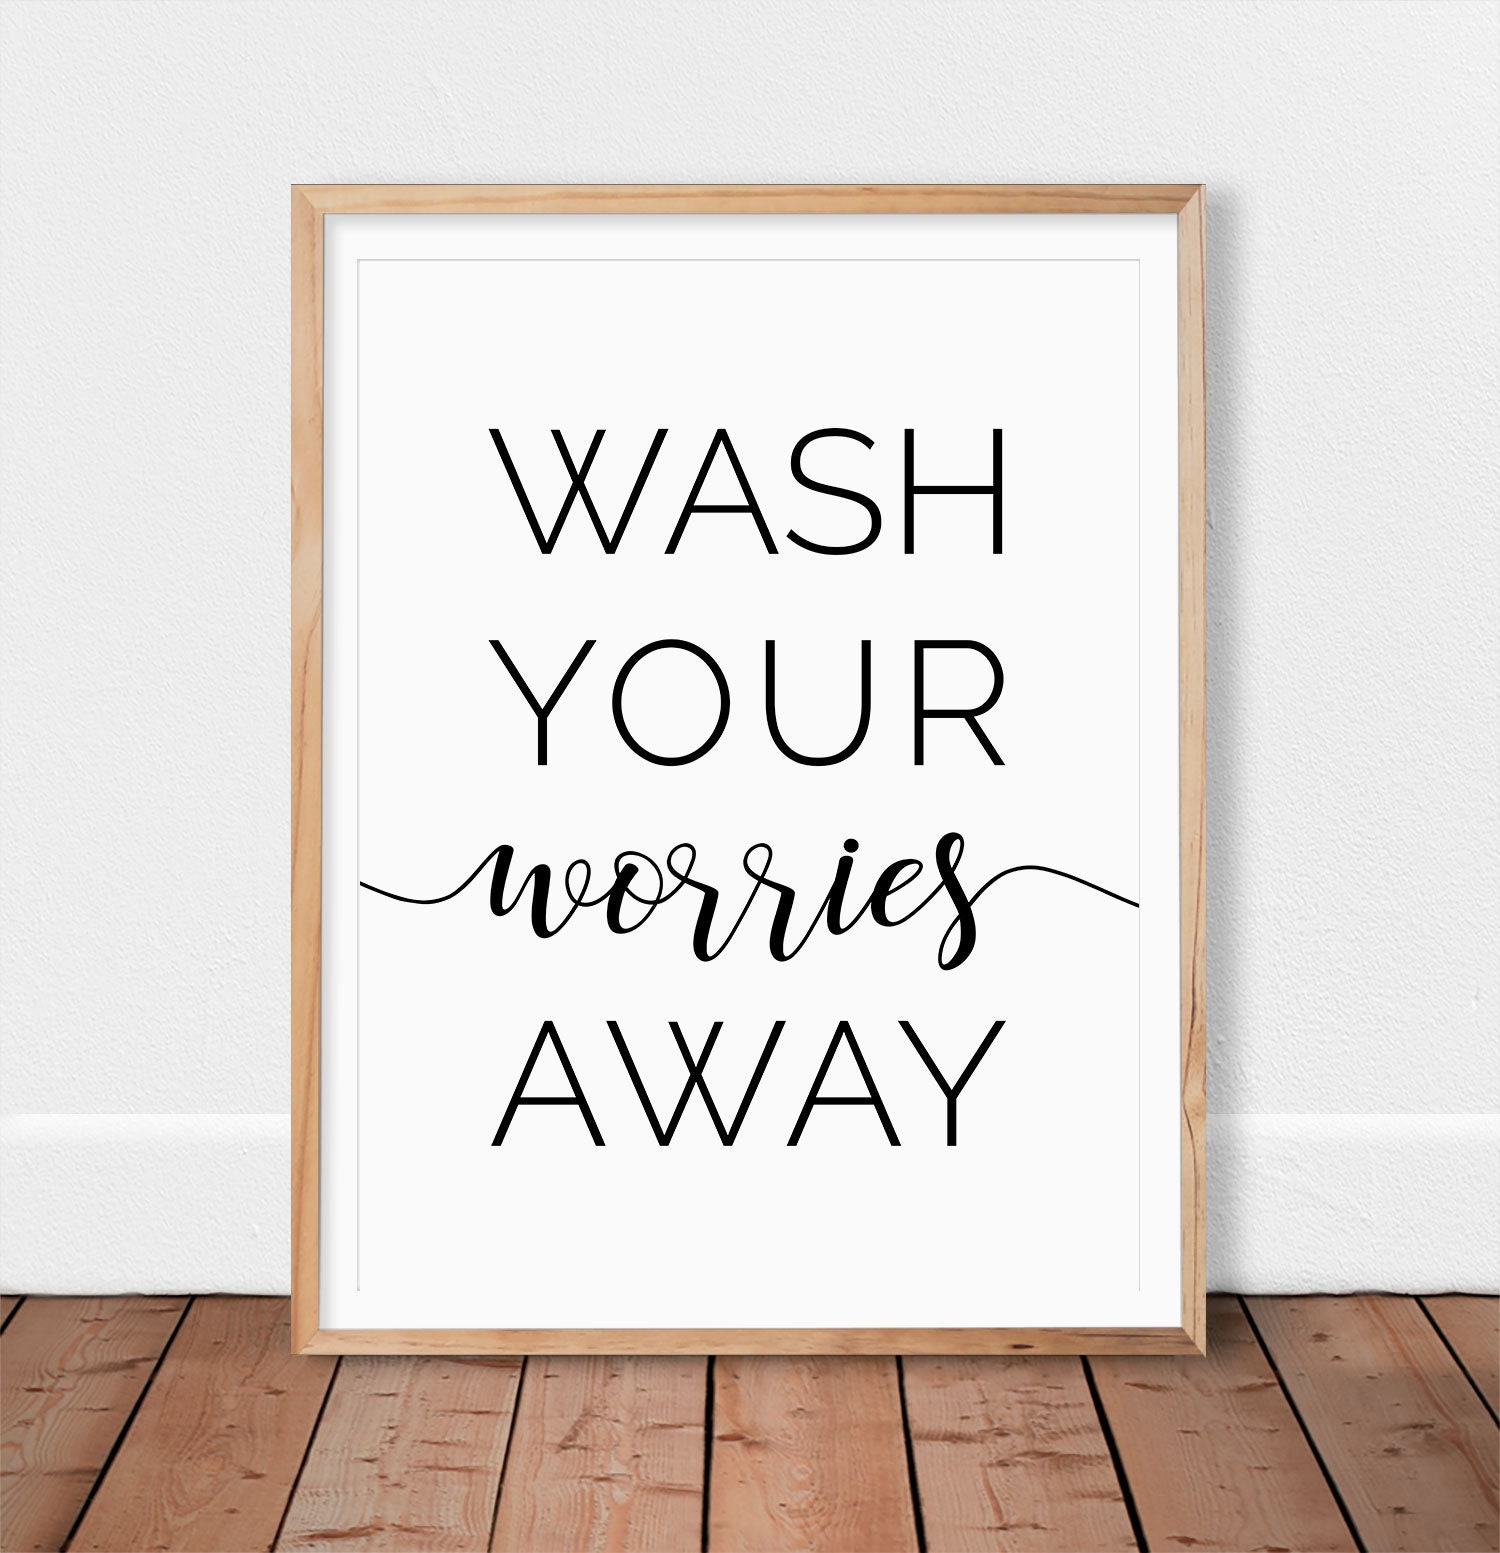 Wash your worries away print sign Bathroom wall decor | Etsy